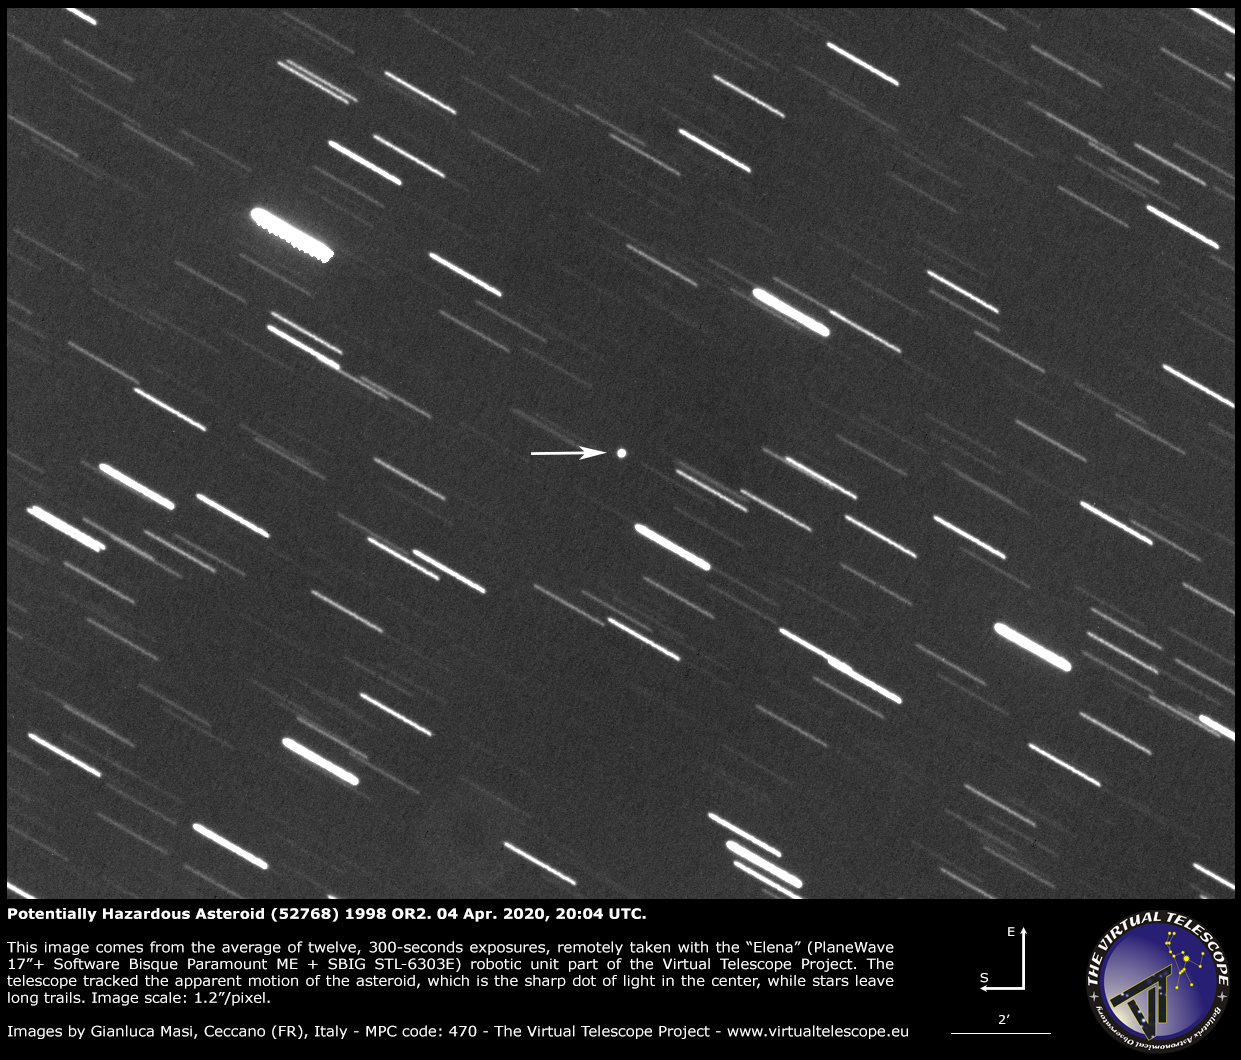 Potentially Hazardous Asteroid (52768) 1998 OR2: a image - 04 Apr. 2020